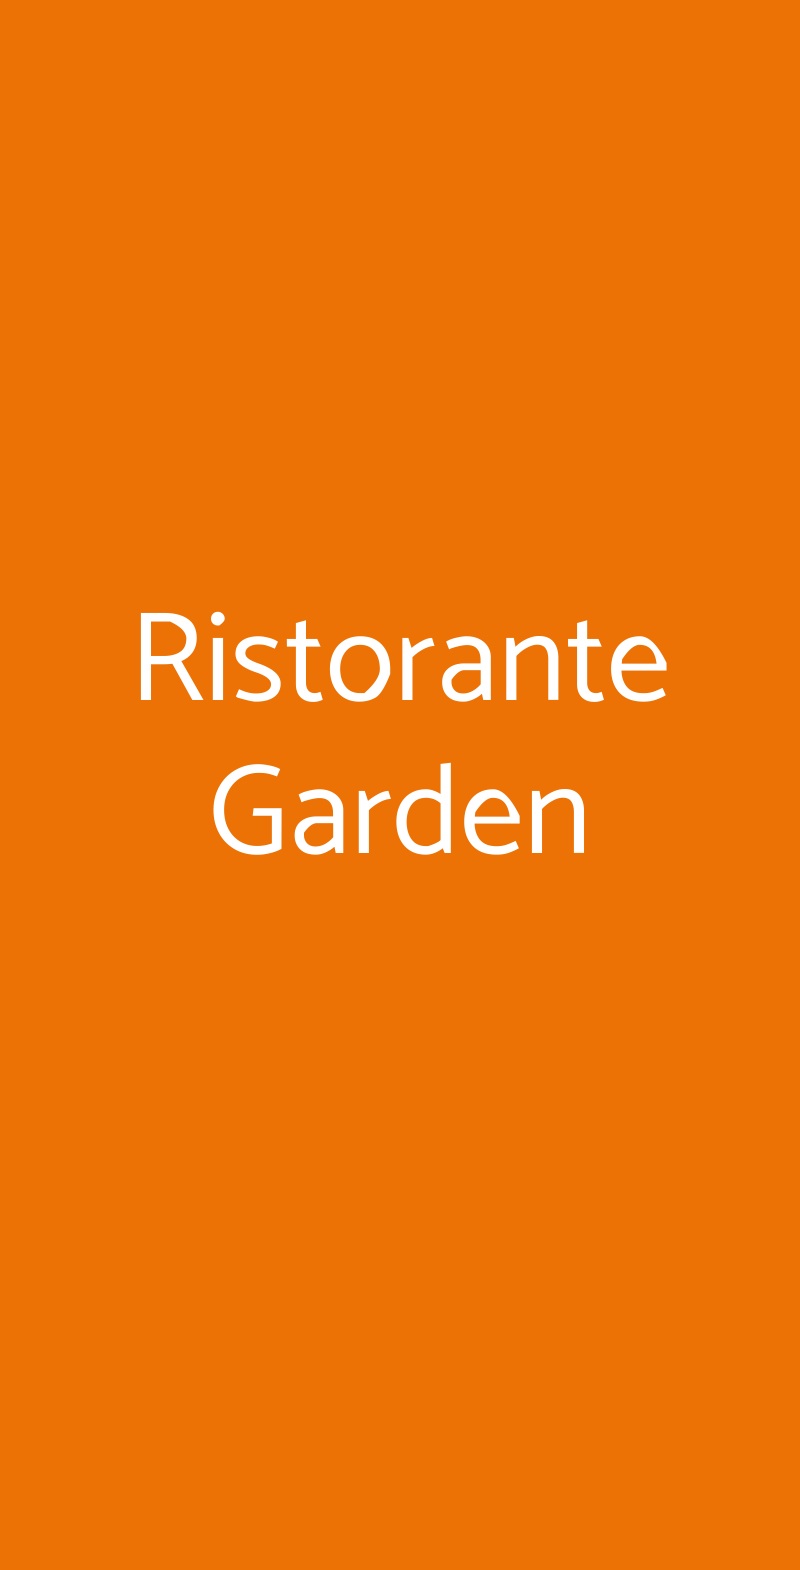 Ristorante Garden Rapino menù 1 pagina